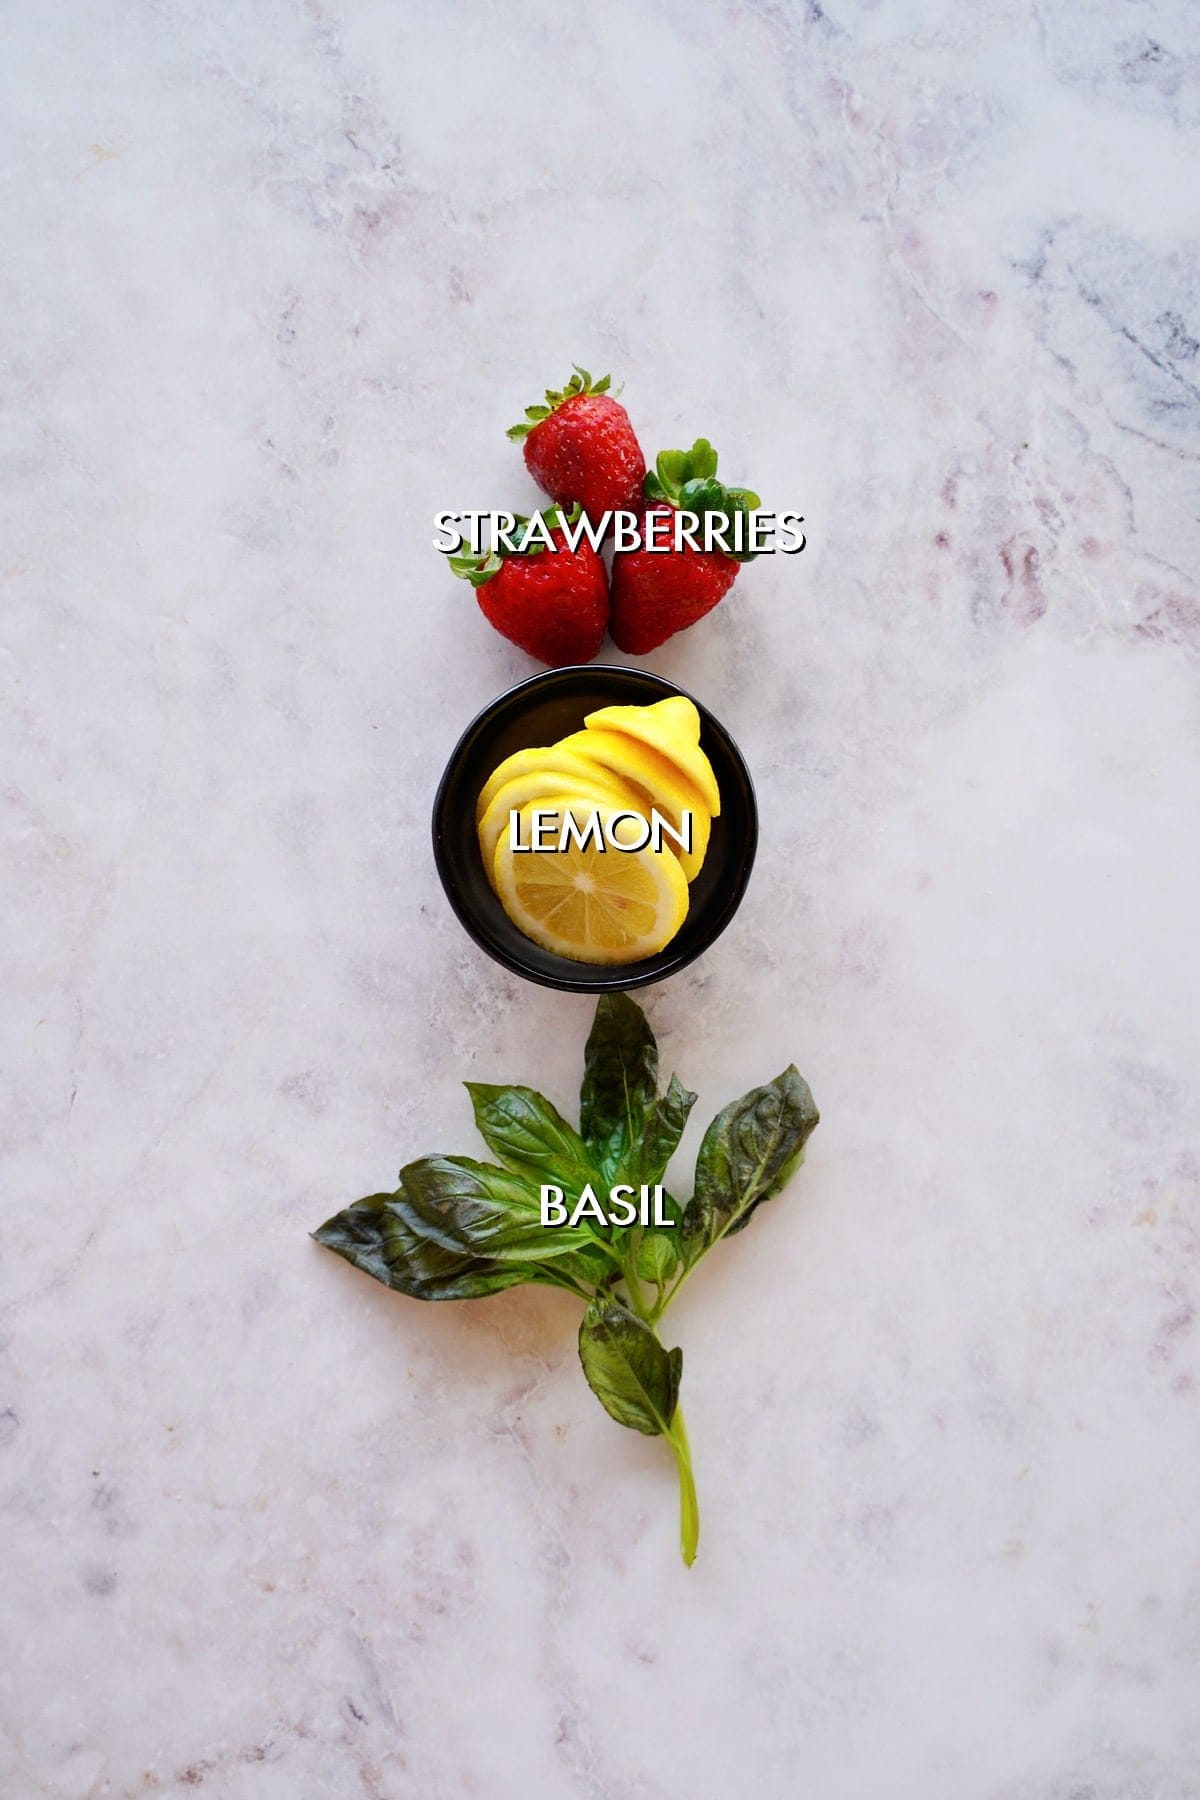 strawberries, lemon and basil on white backdrop